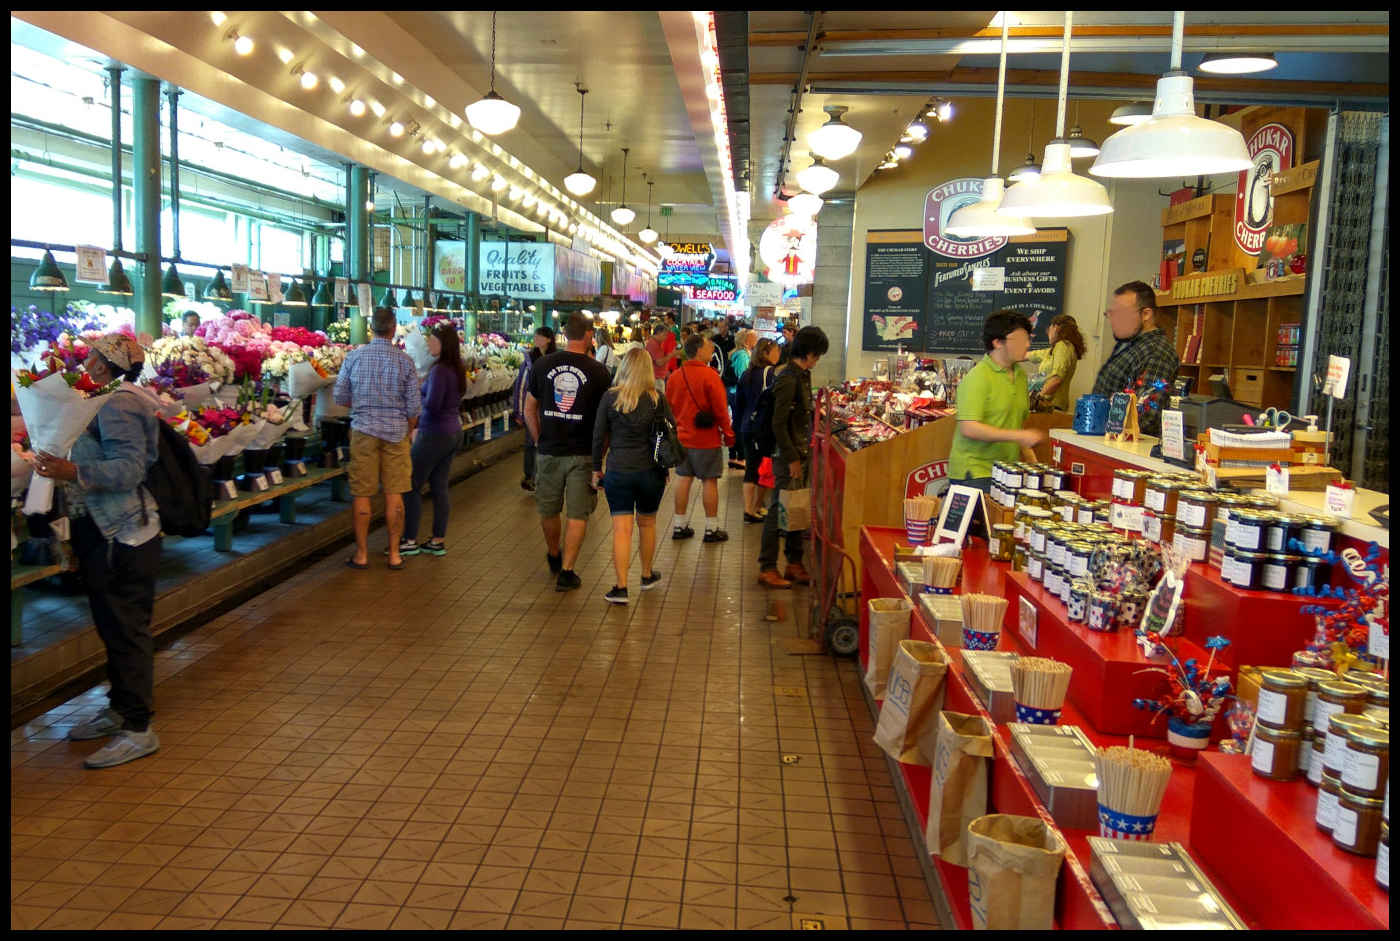 Pike Place Fish Market